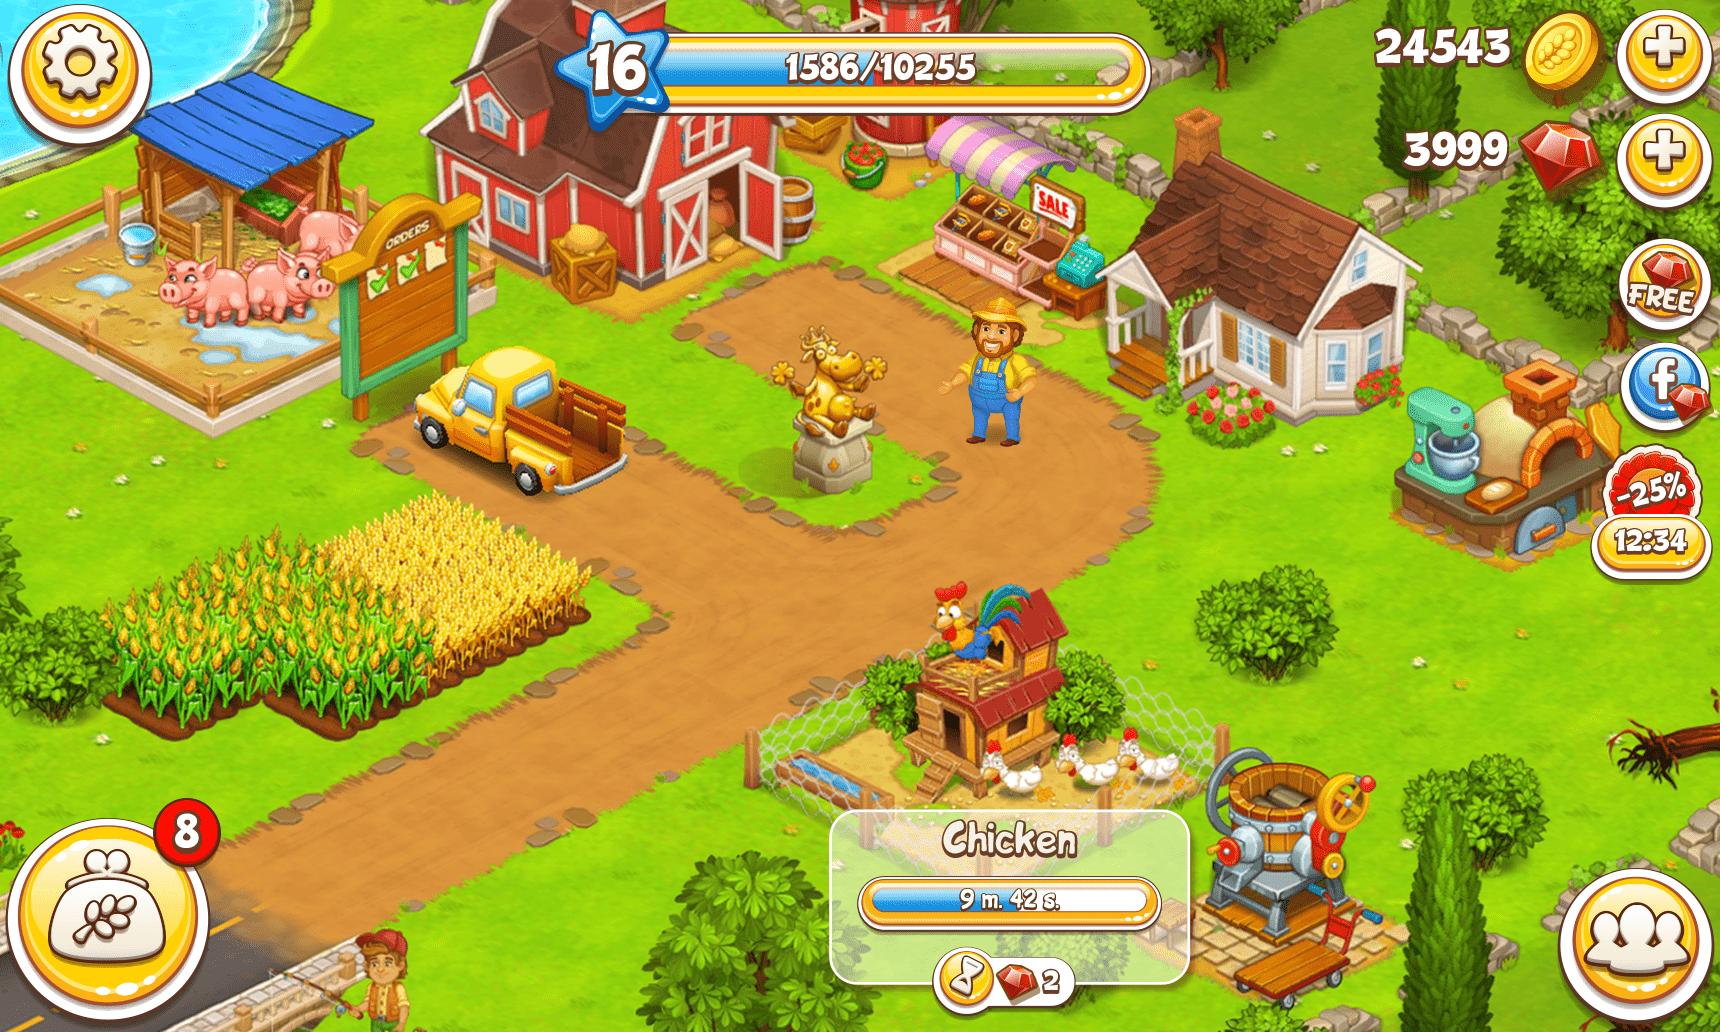 Farm Town: Happy village near small city and town 3.41 Screenshot 5